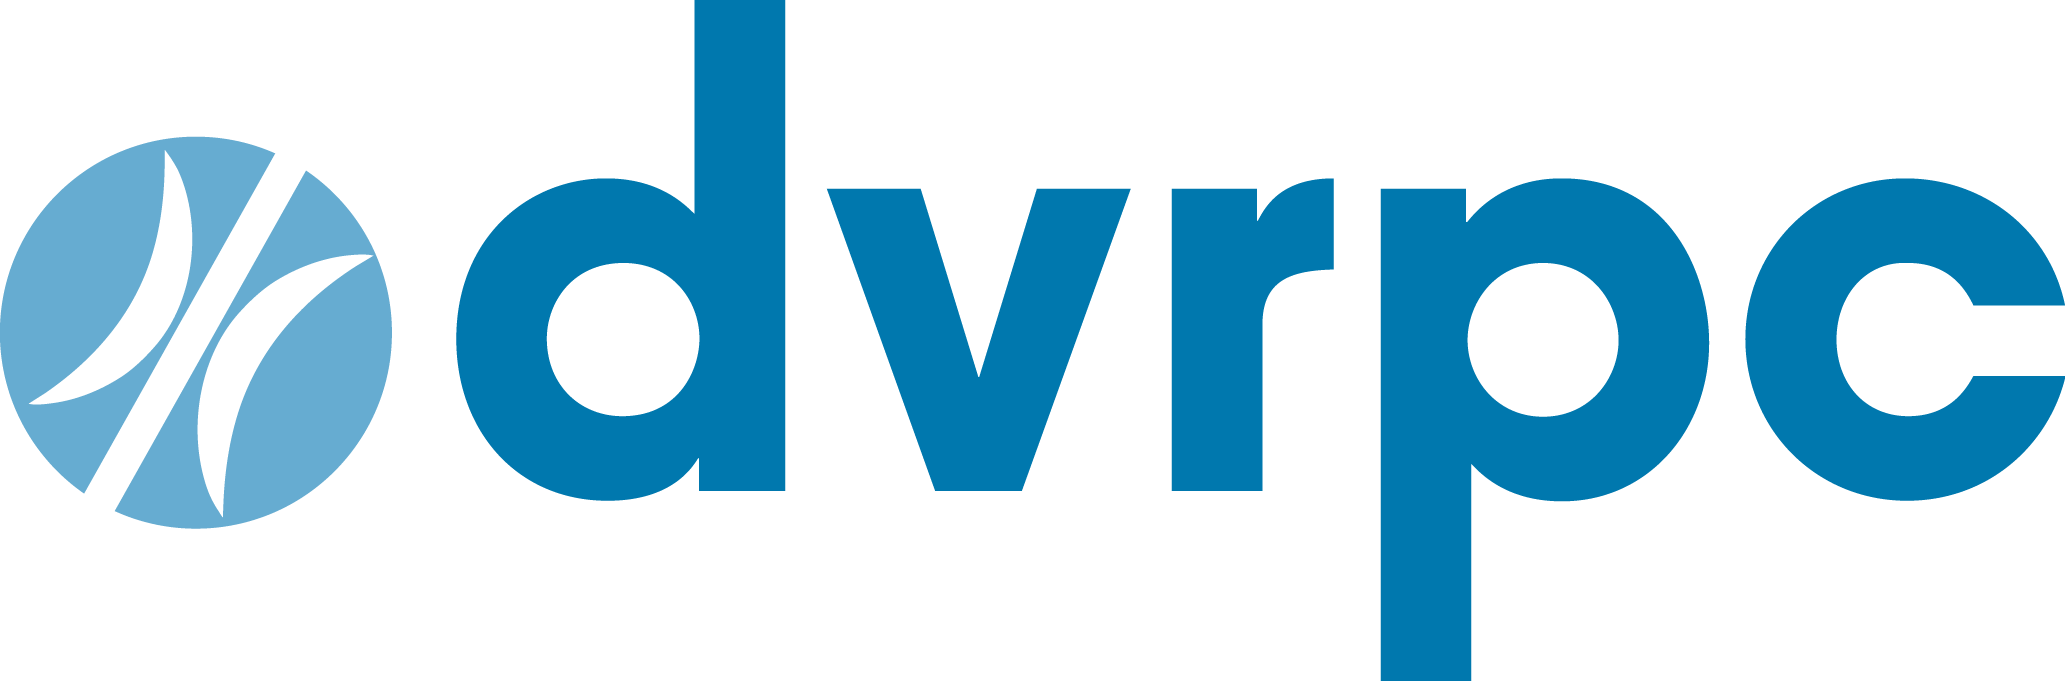 Delaware Valley Regional Planning Commission (DVRPC)